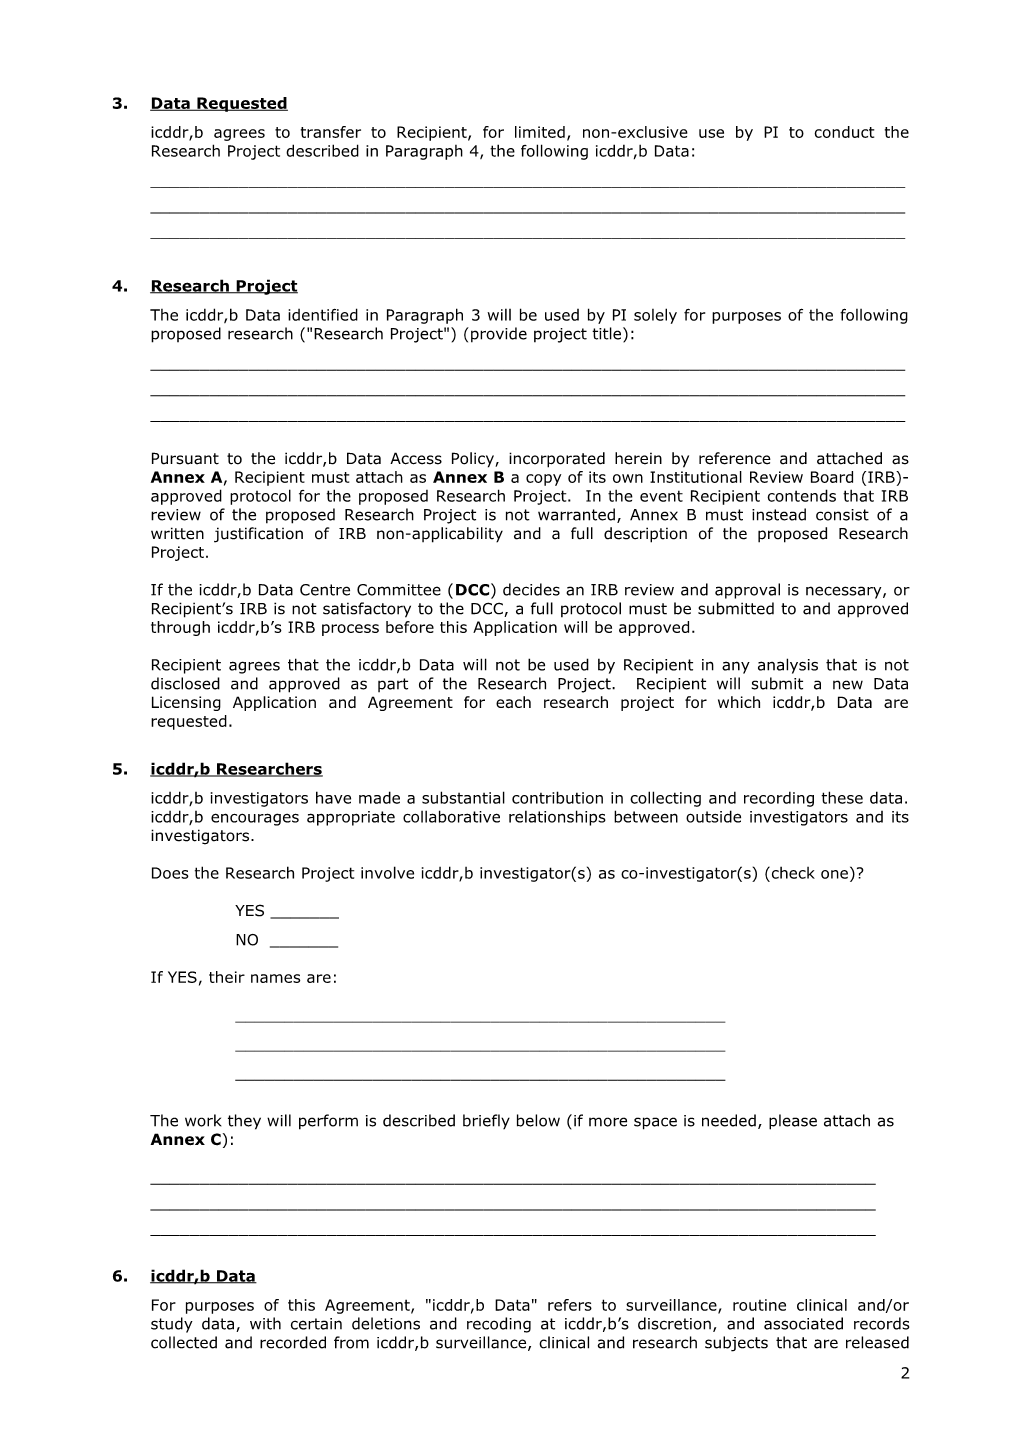 Data Distribution Application & Agreement Form